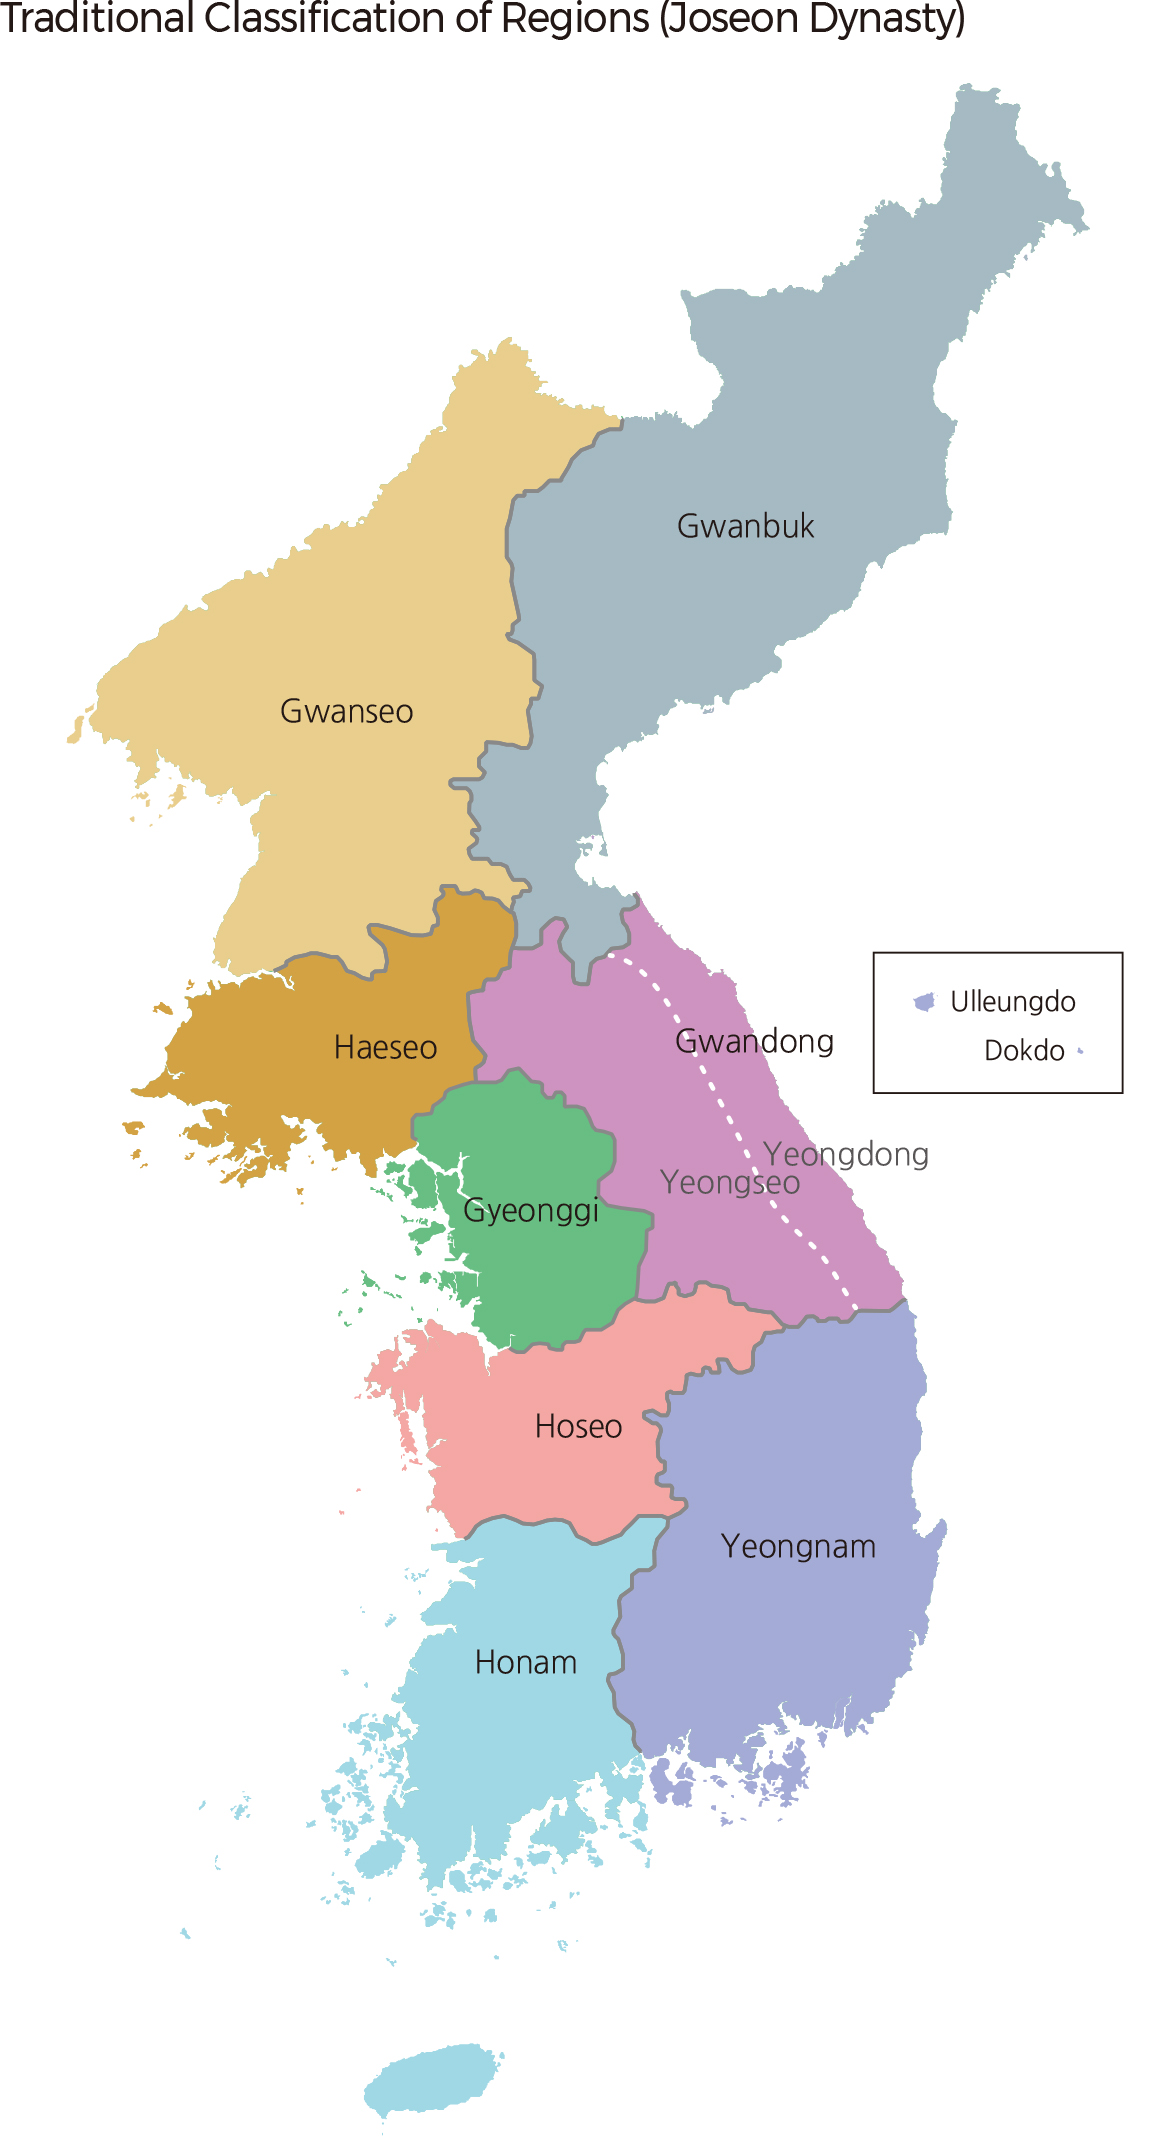 Traditional Classification of Regions (Joseon Dynasty)